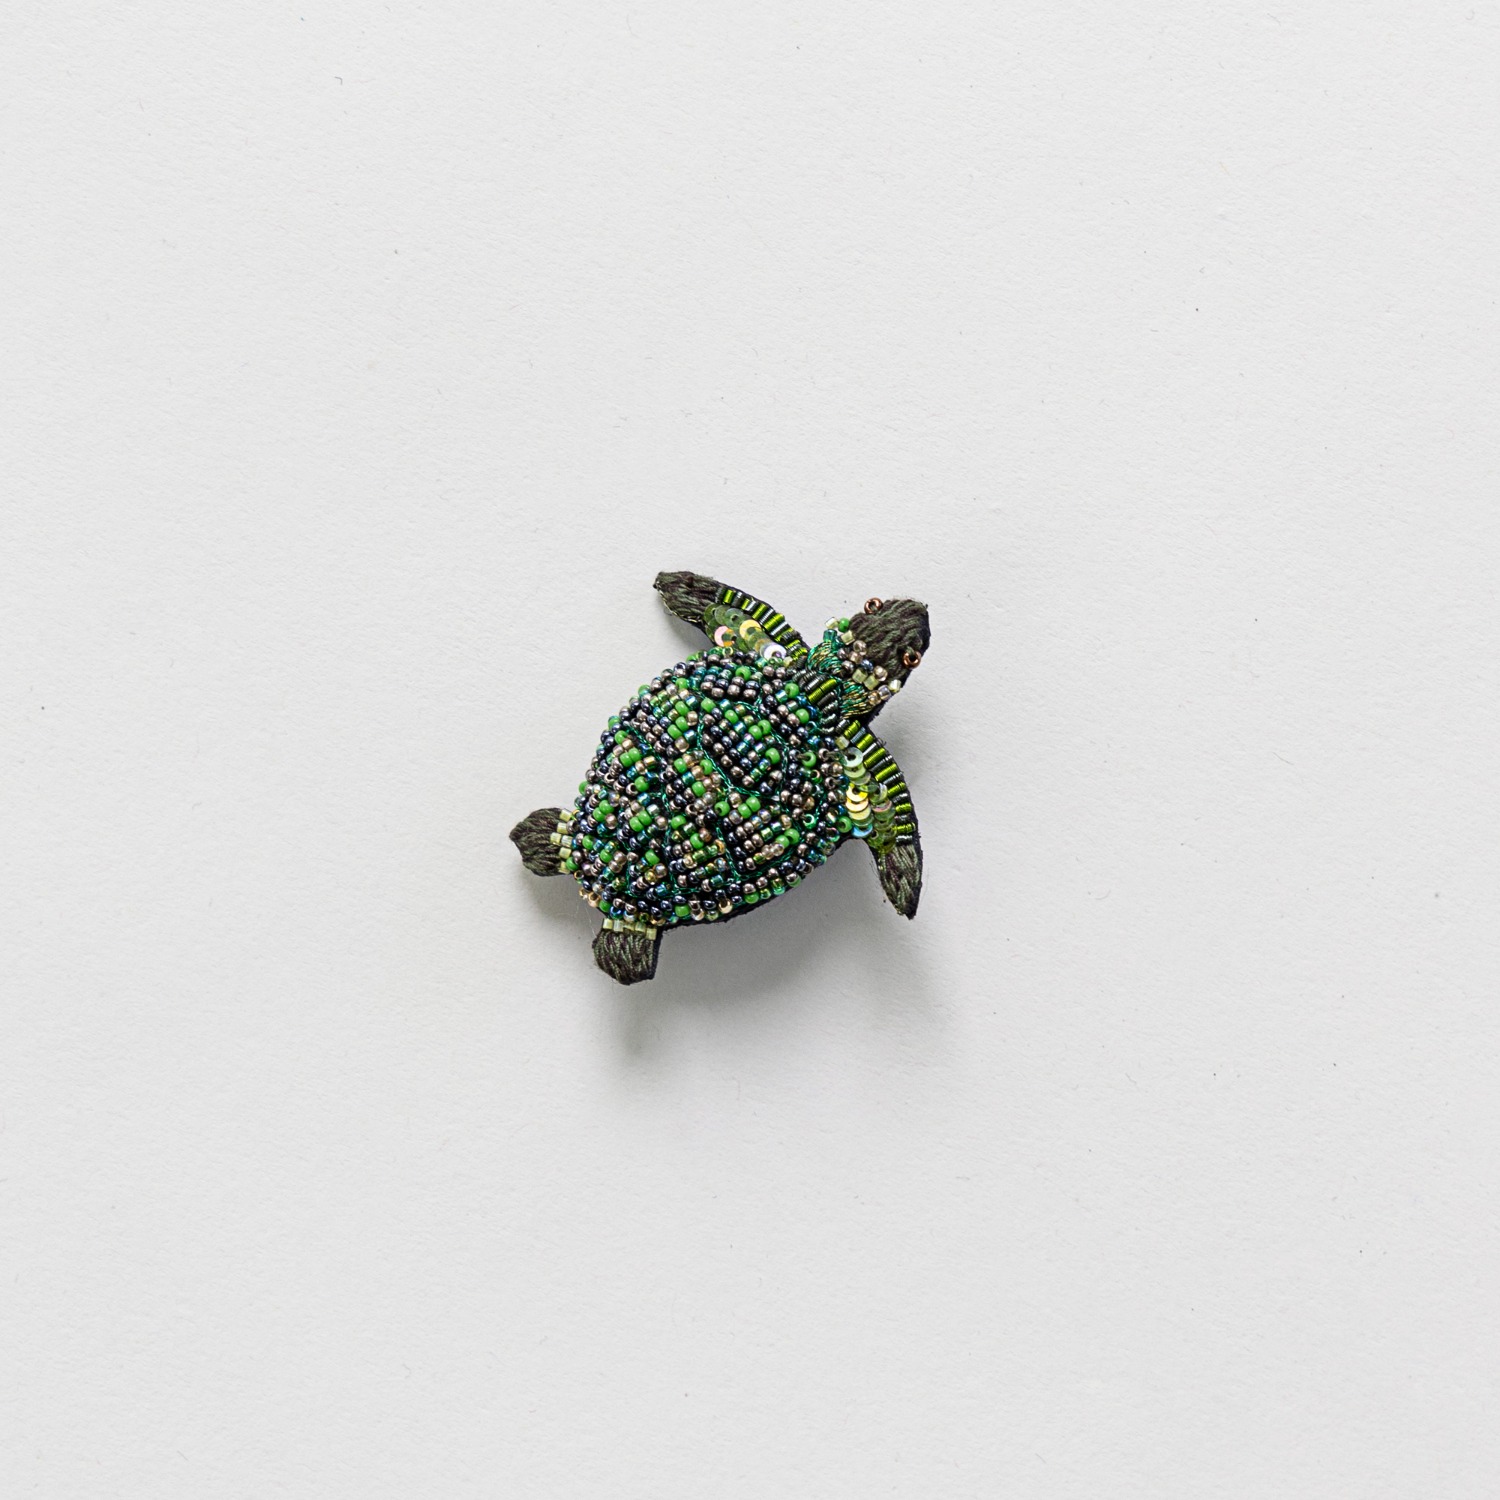 TROVELORE Green Sea Turtle Brooch Pin